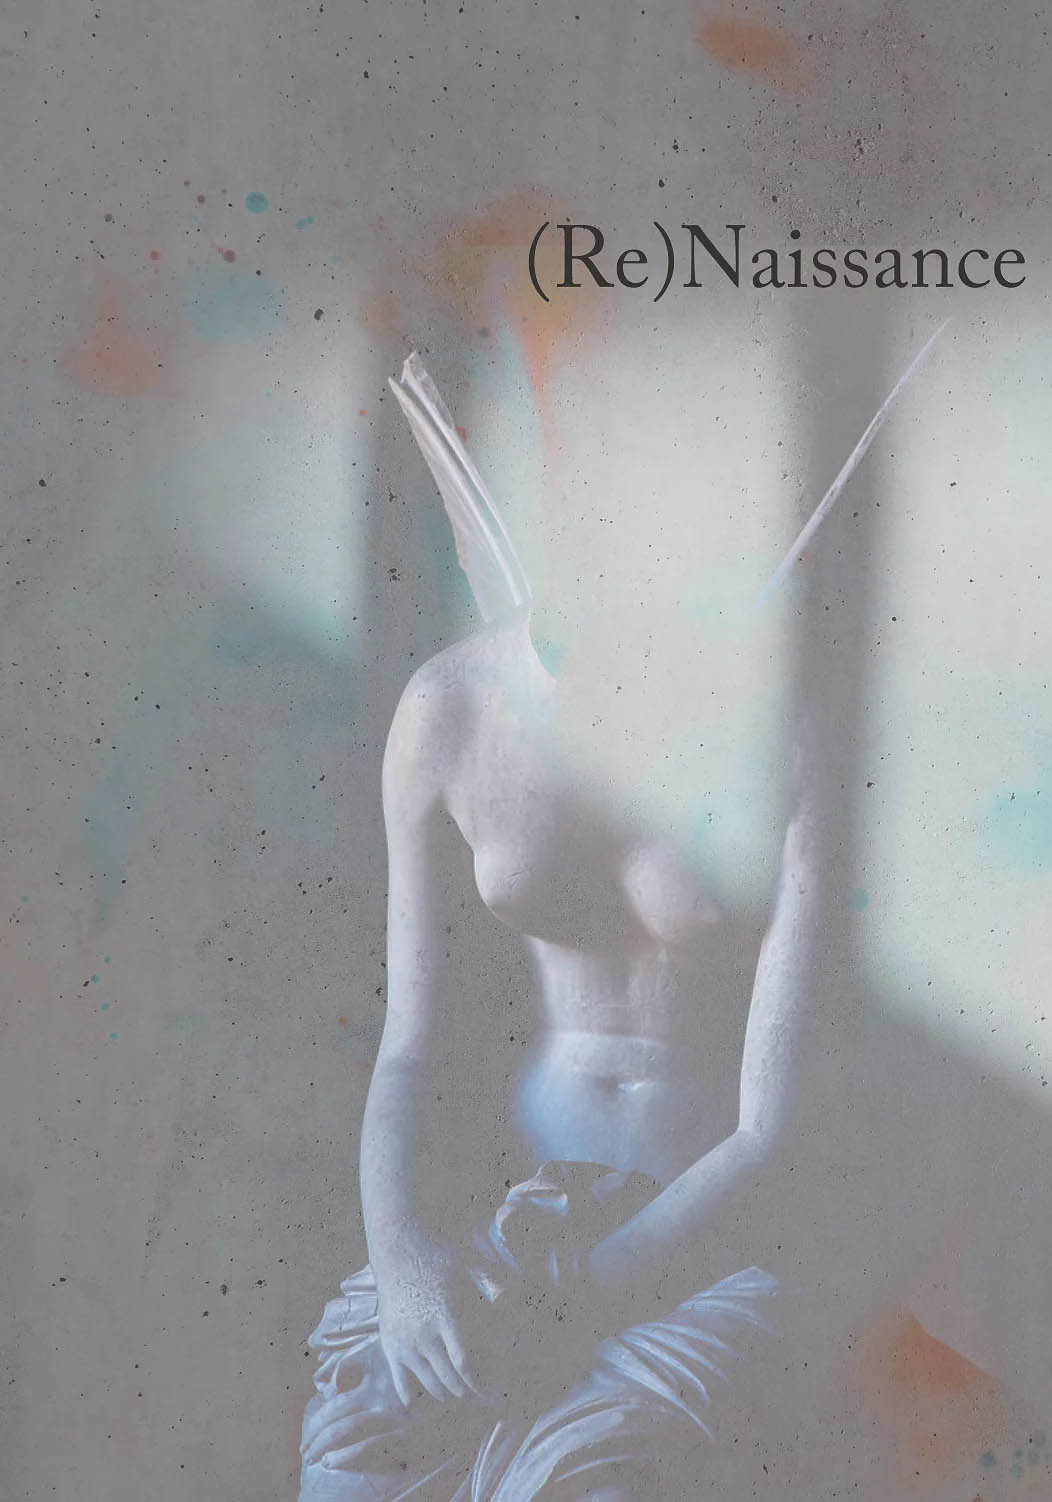 (Re)Naissance